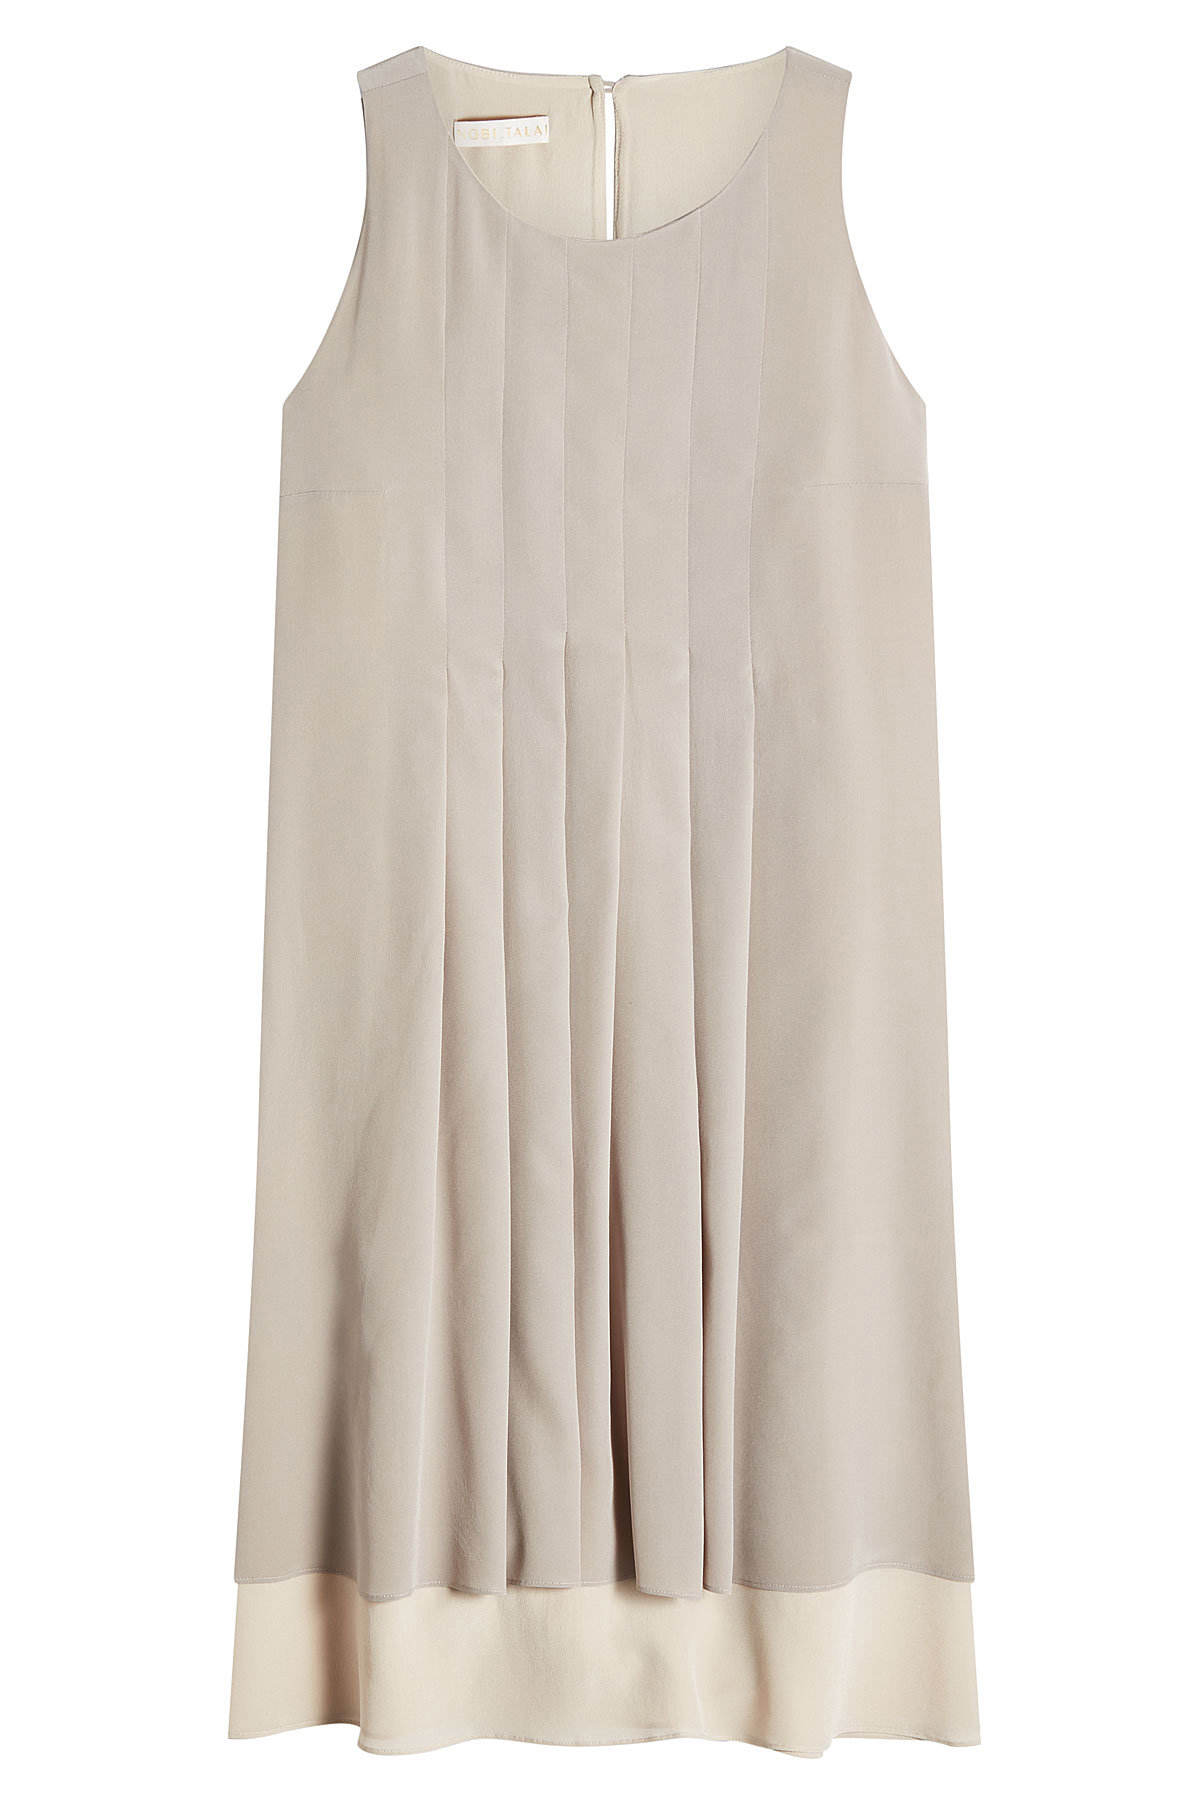 Nobi Talai - Layered and Pleated Silk Dress